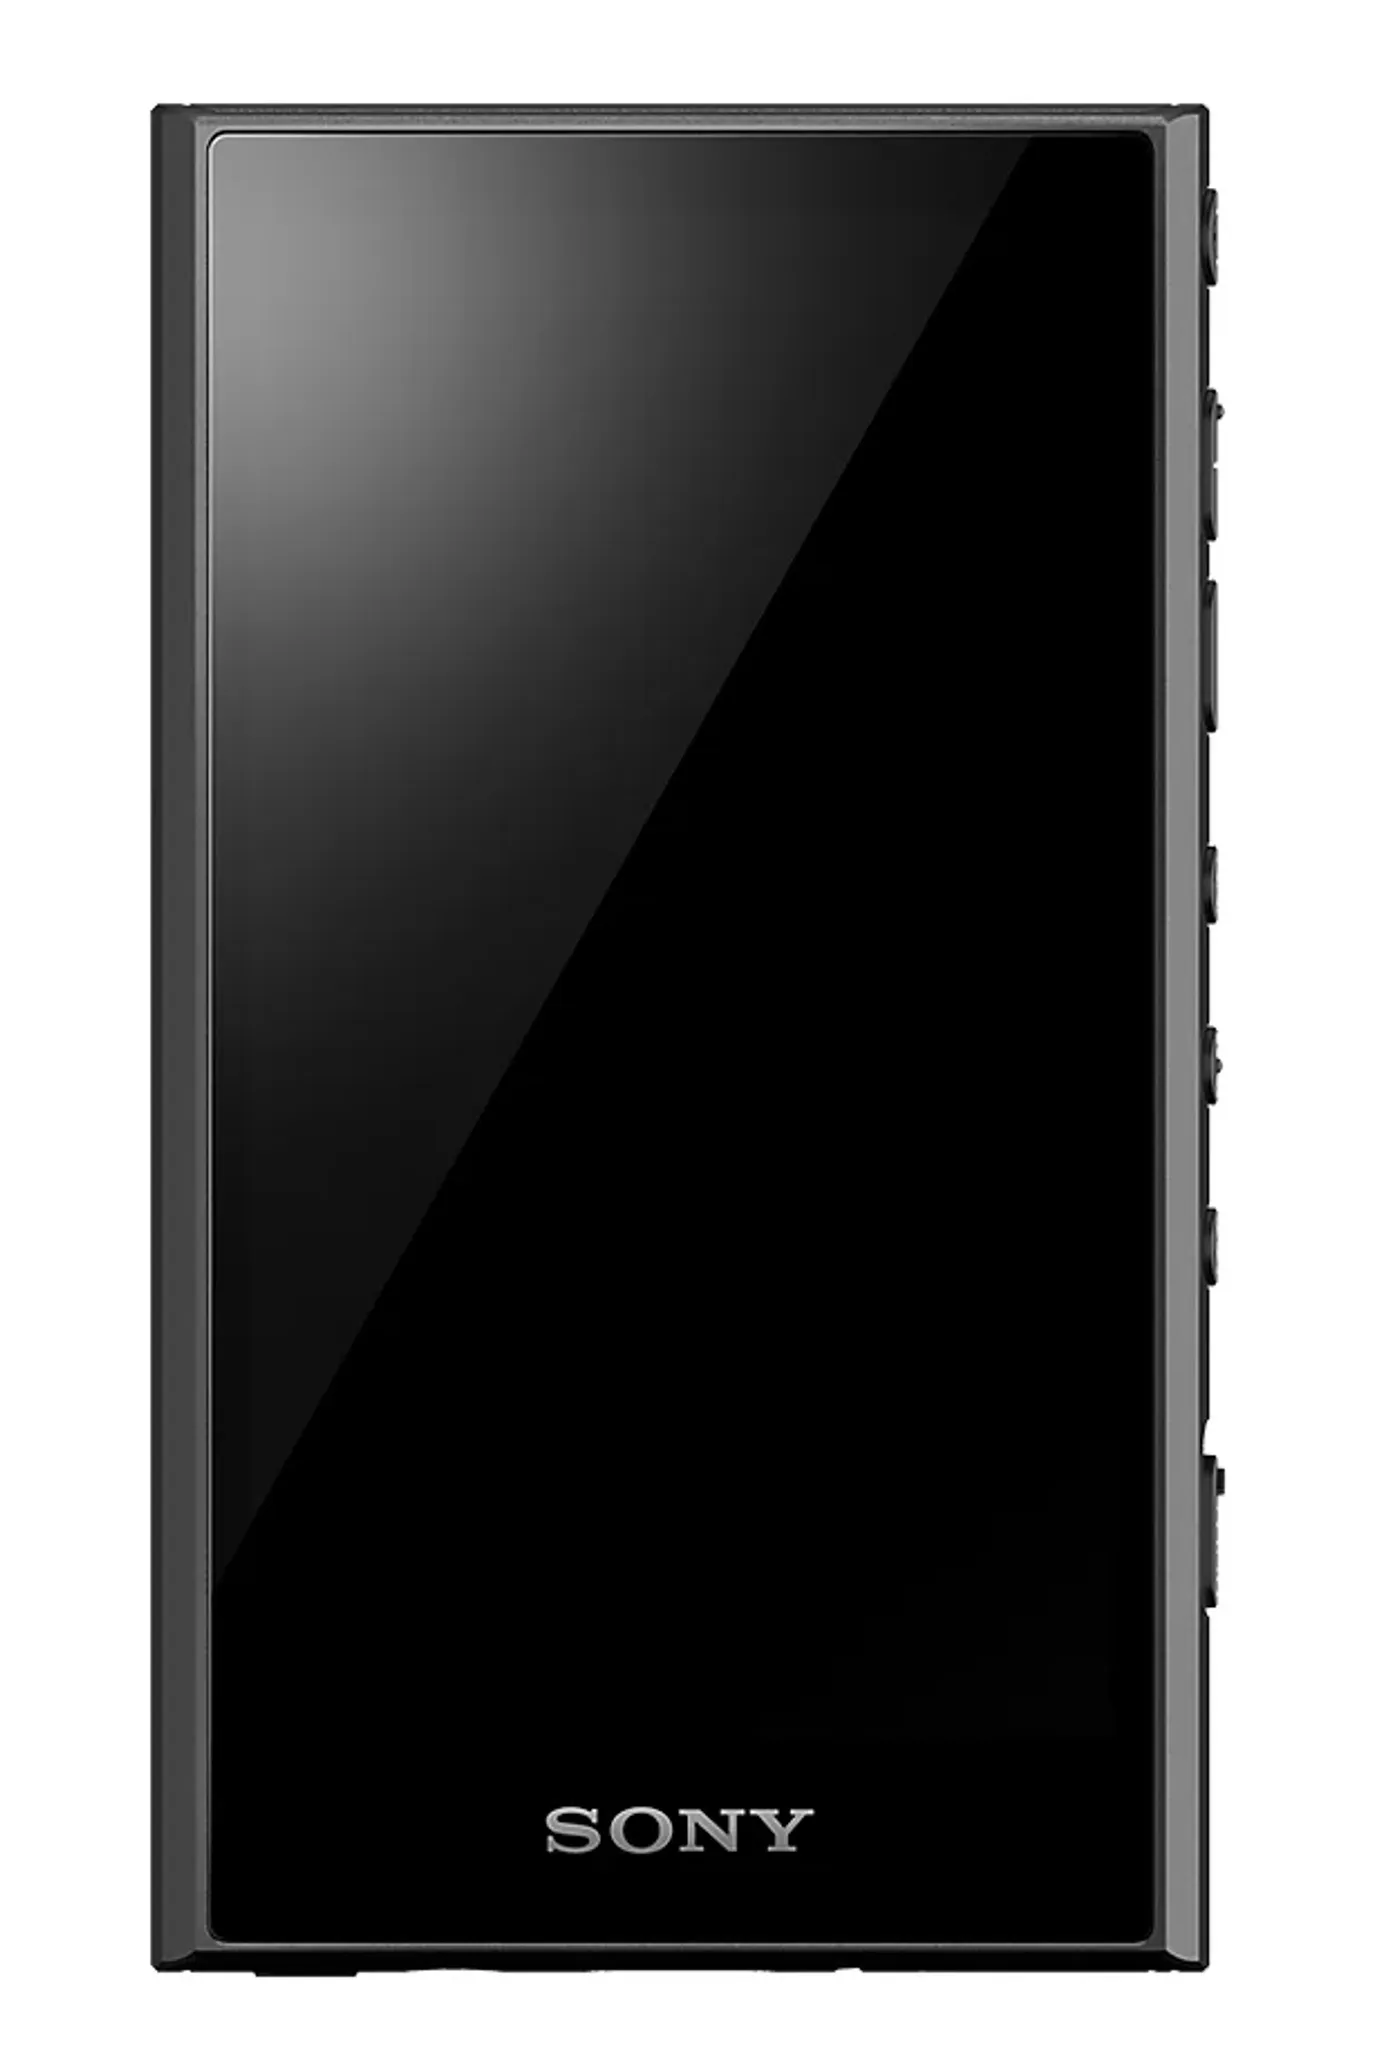 Player Touchscreen Sony NW-A306 Walkman MP3